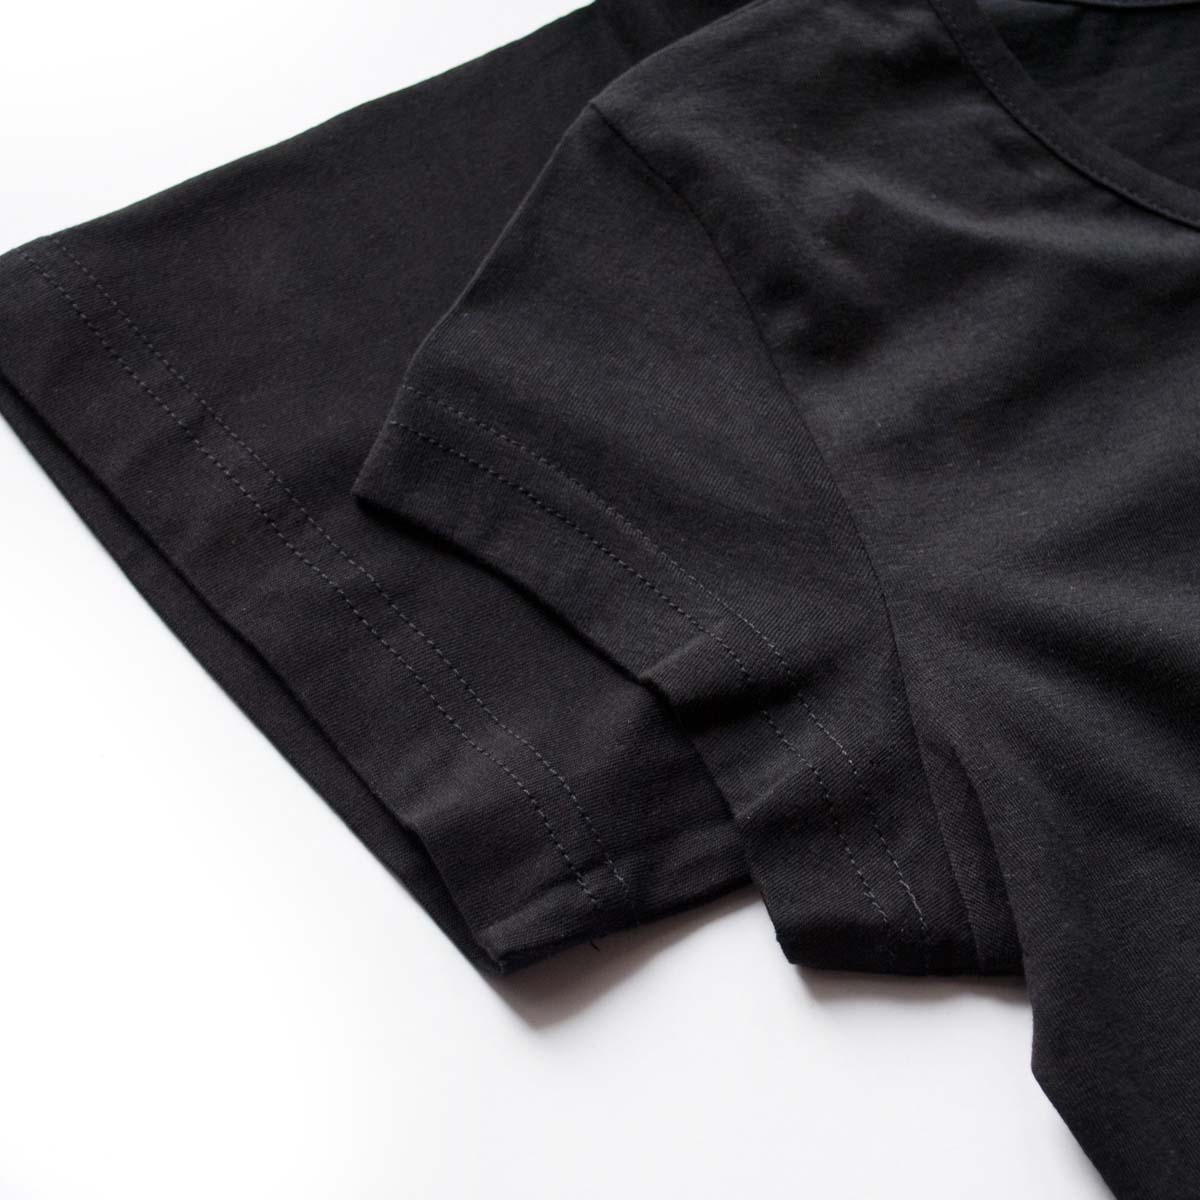 detaliu maneca tricouri cupluri negre